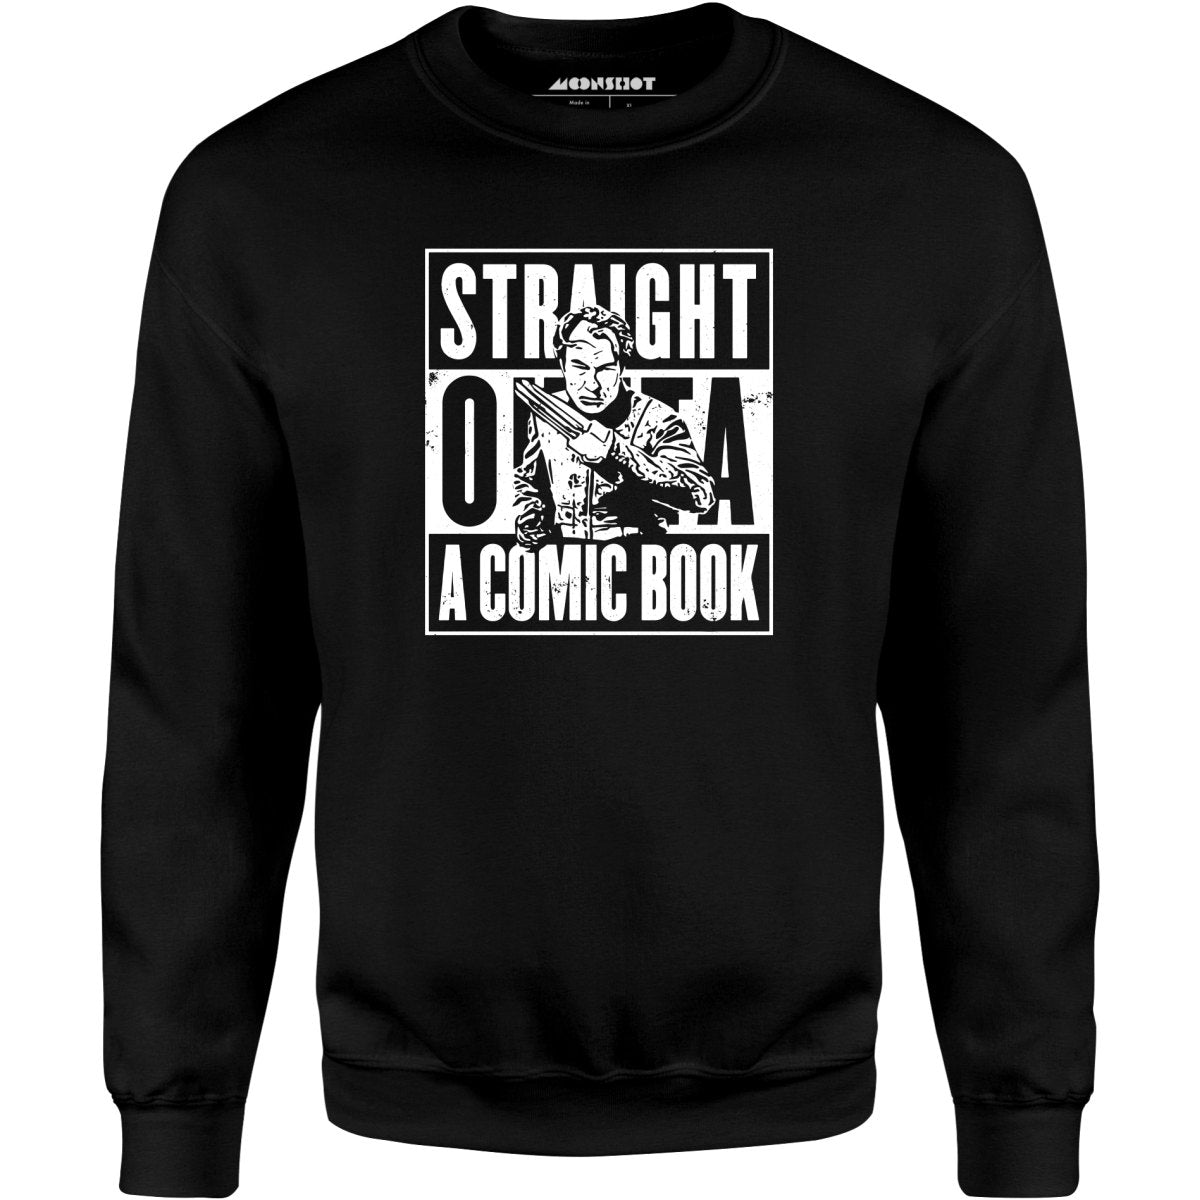 Straight Outta a Comic Book - Unisex Sweatshirt